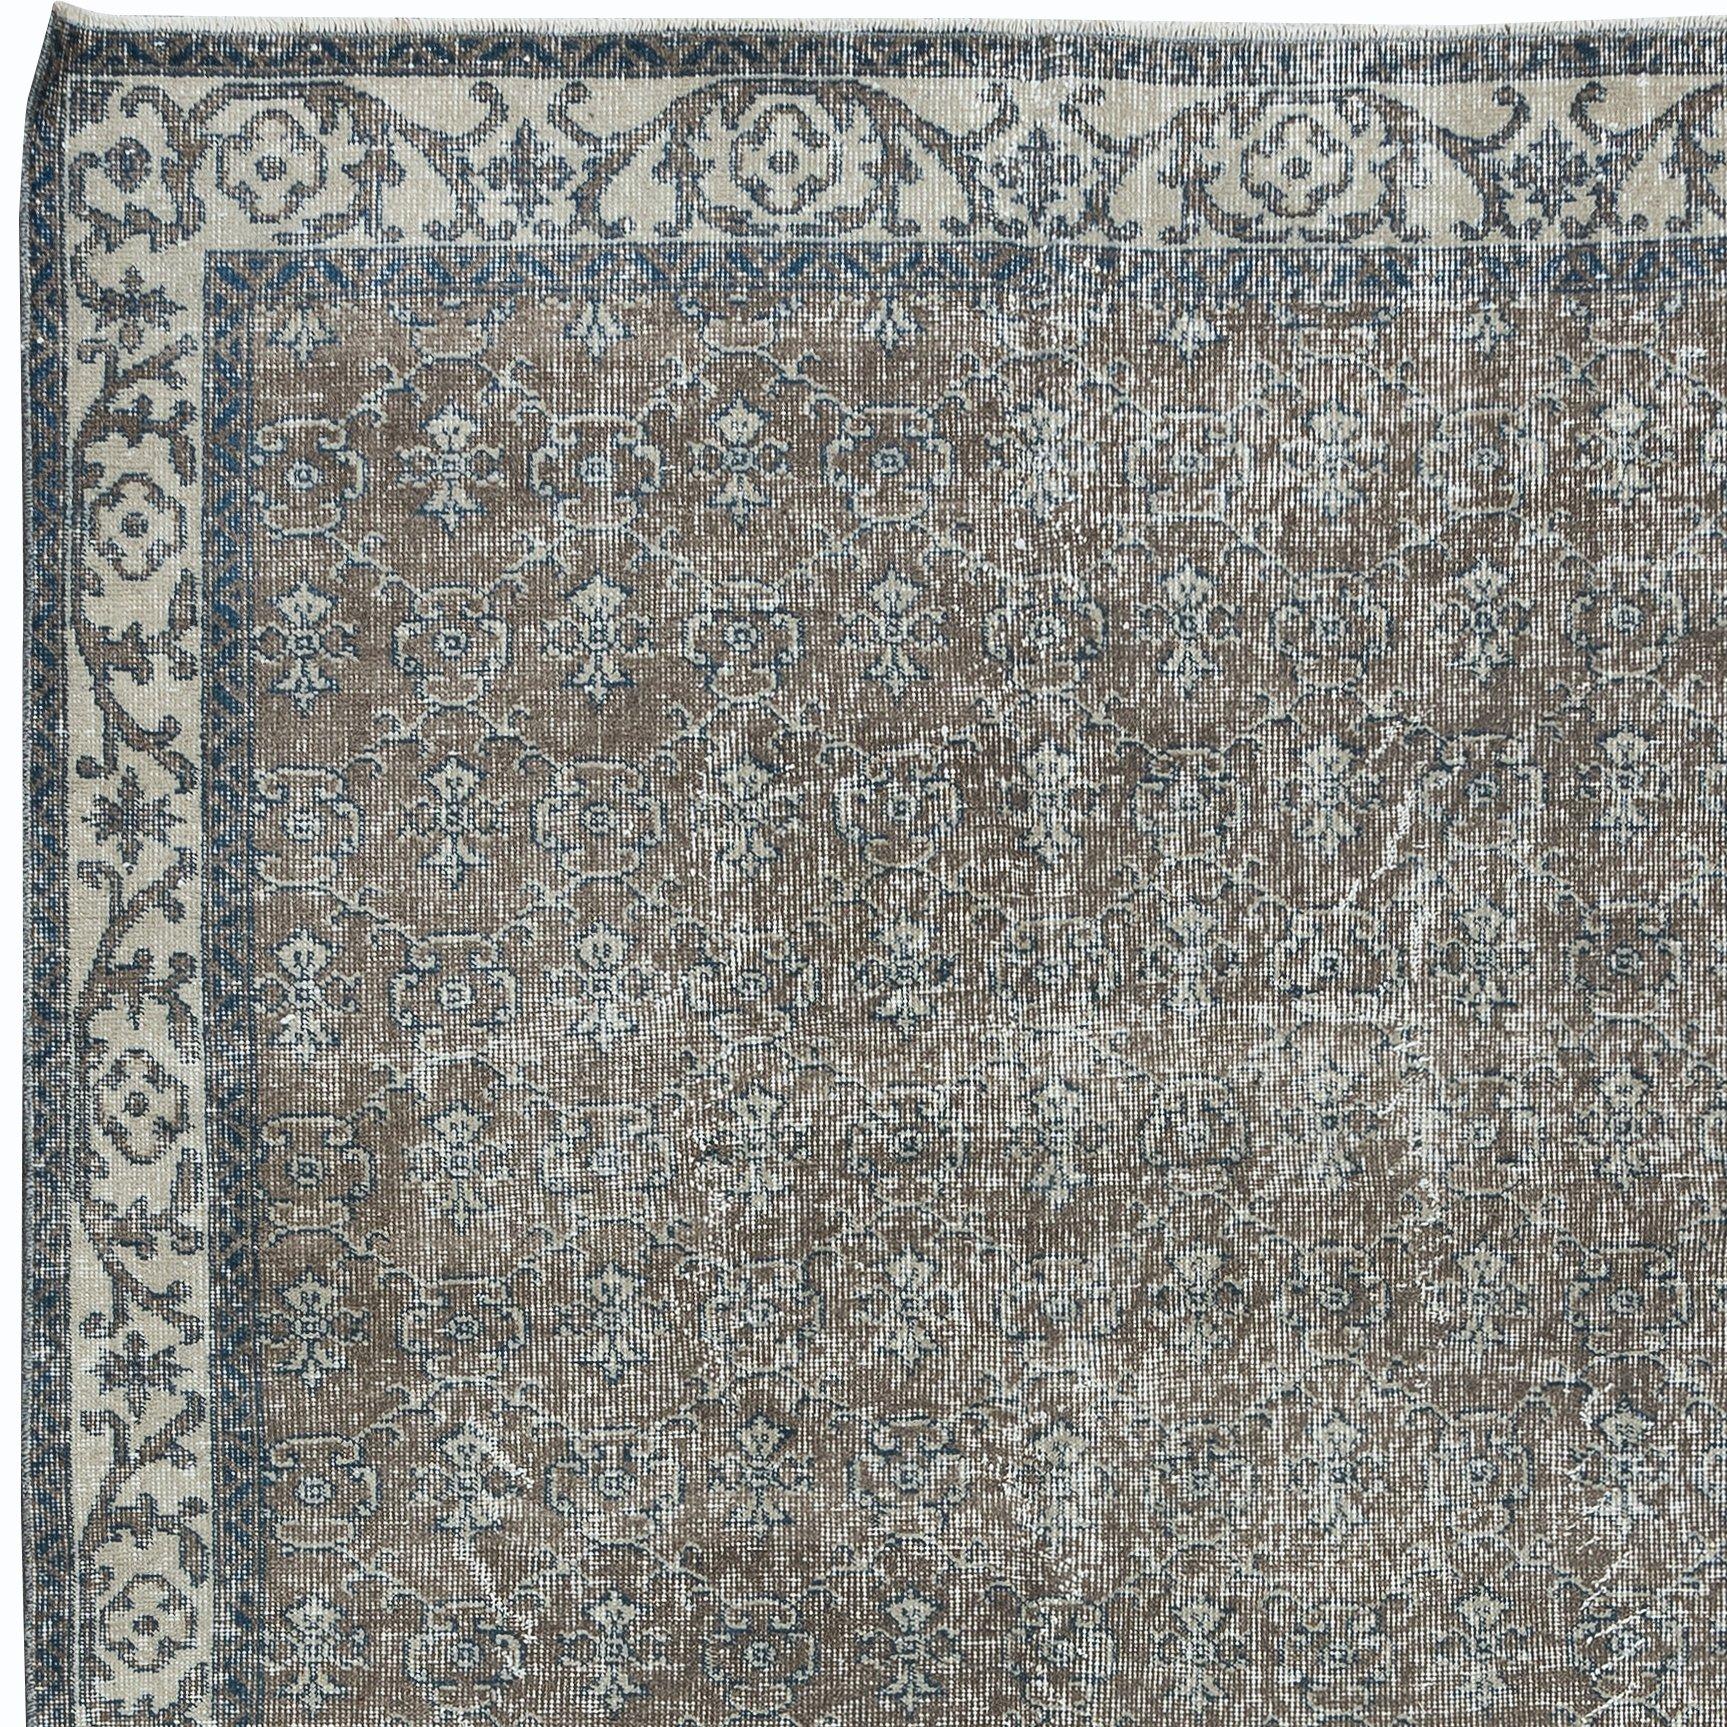 Hand-Knotted 5x8.4 Ft Handmade Turkish Brown Rug, Modern Floral Carpet, Modern Home Decor For Sale